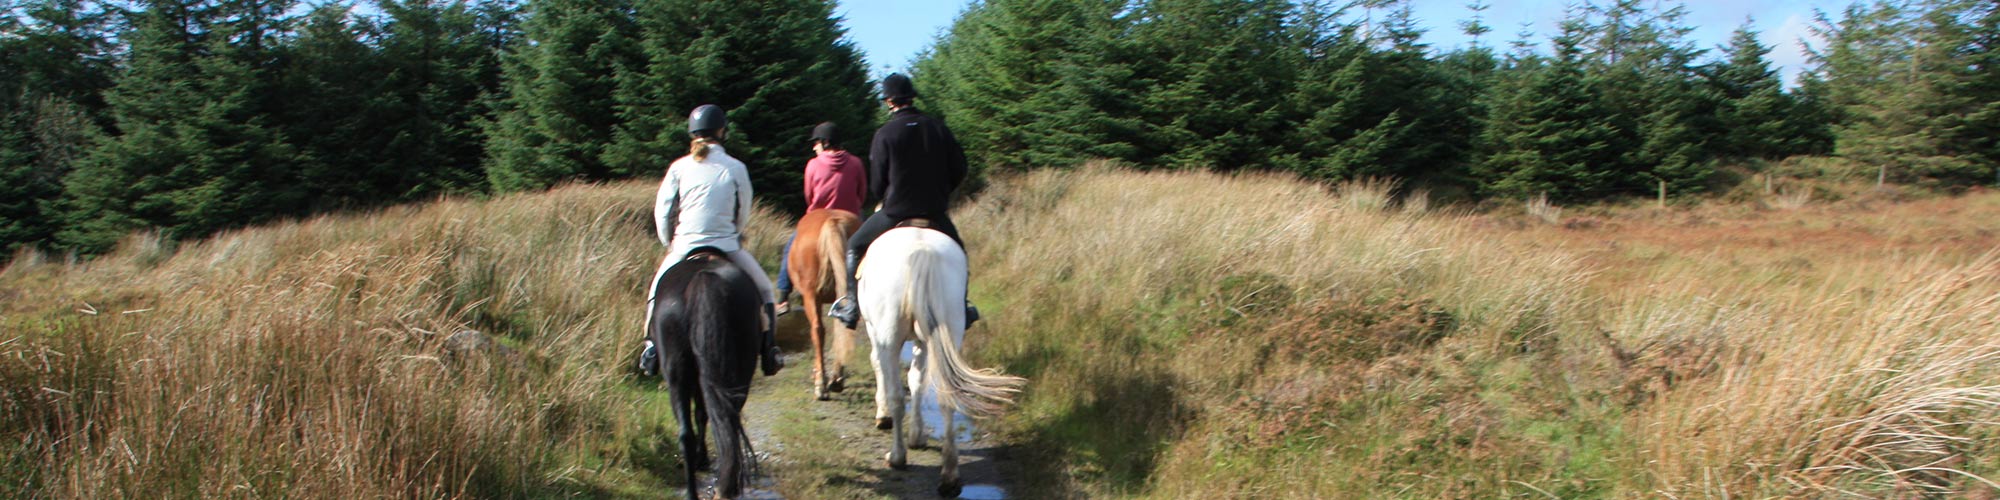 horse riding nature trail ireland